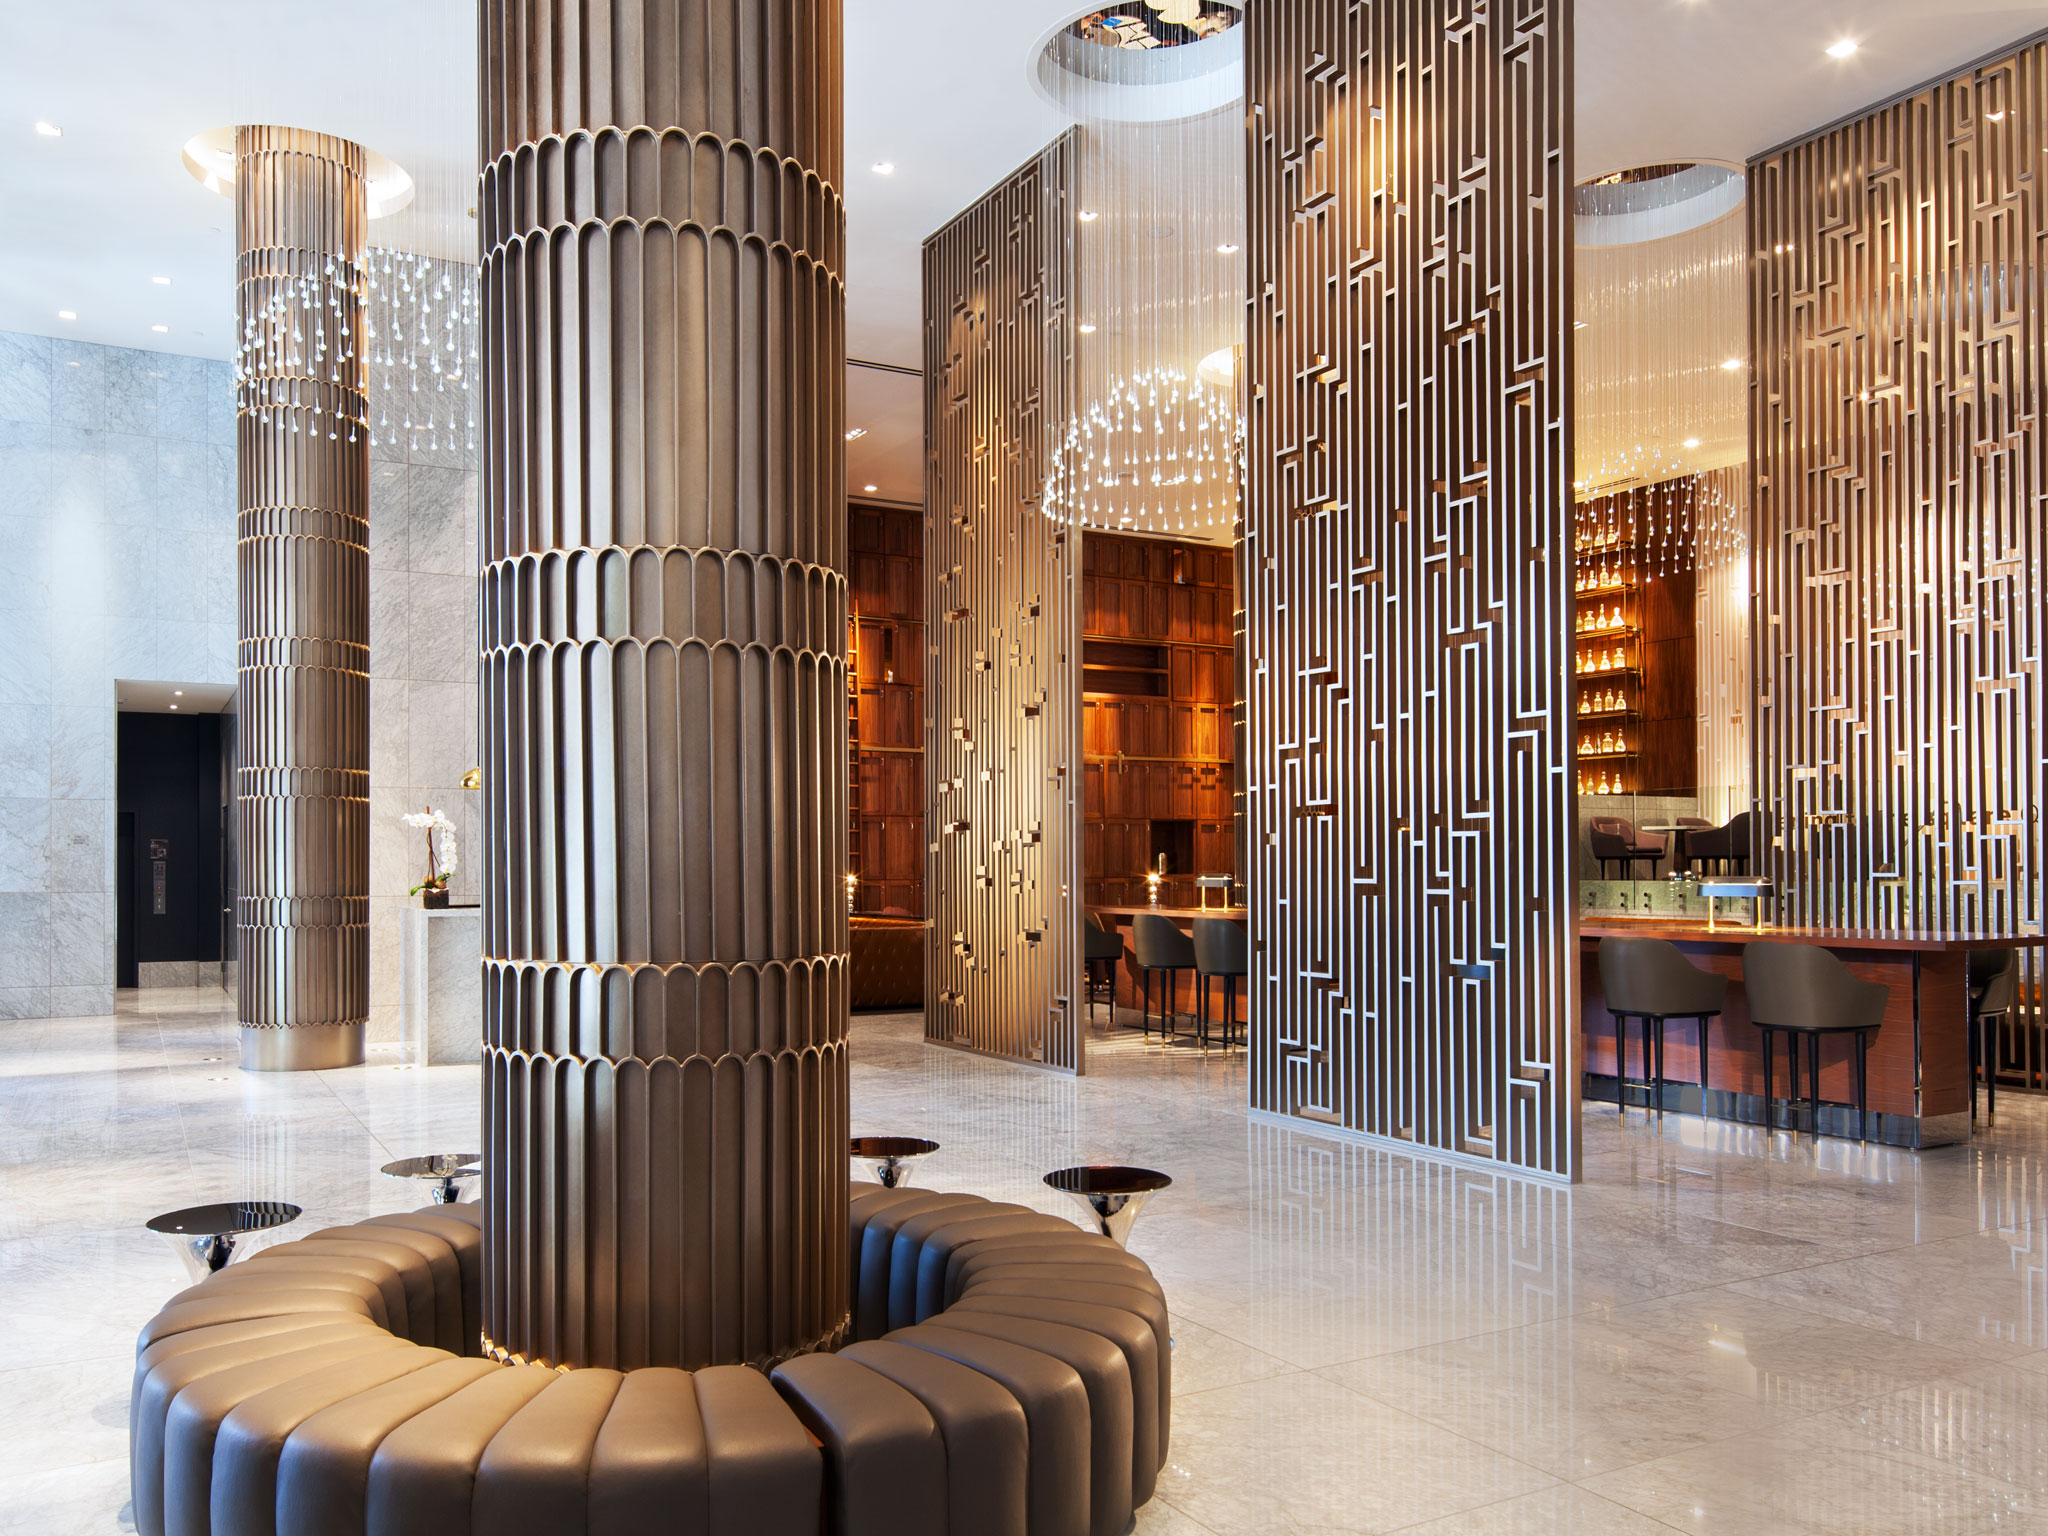 Sheraton DTLA Lobby - Decorative Columns
